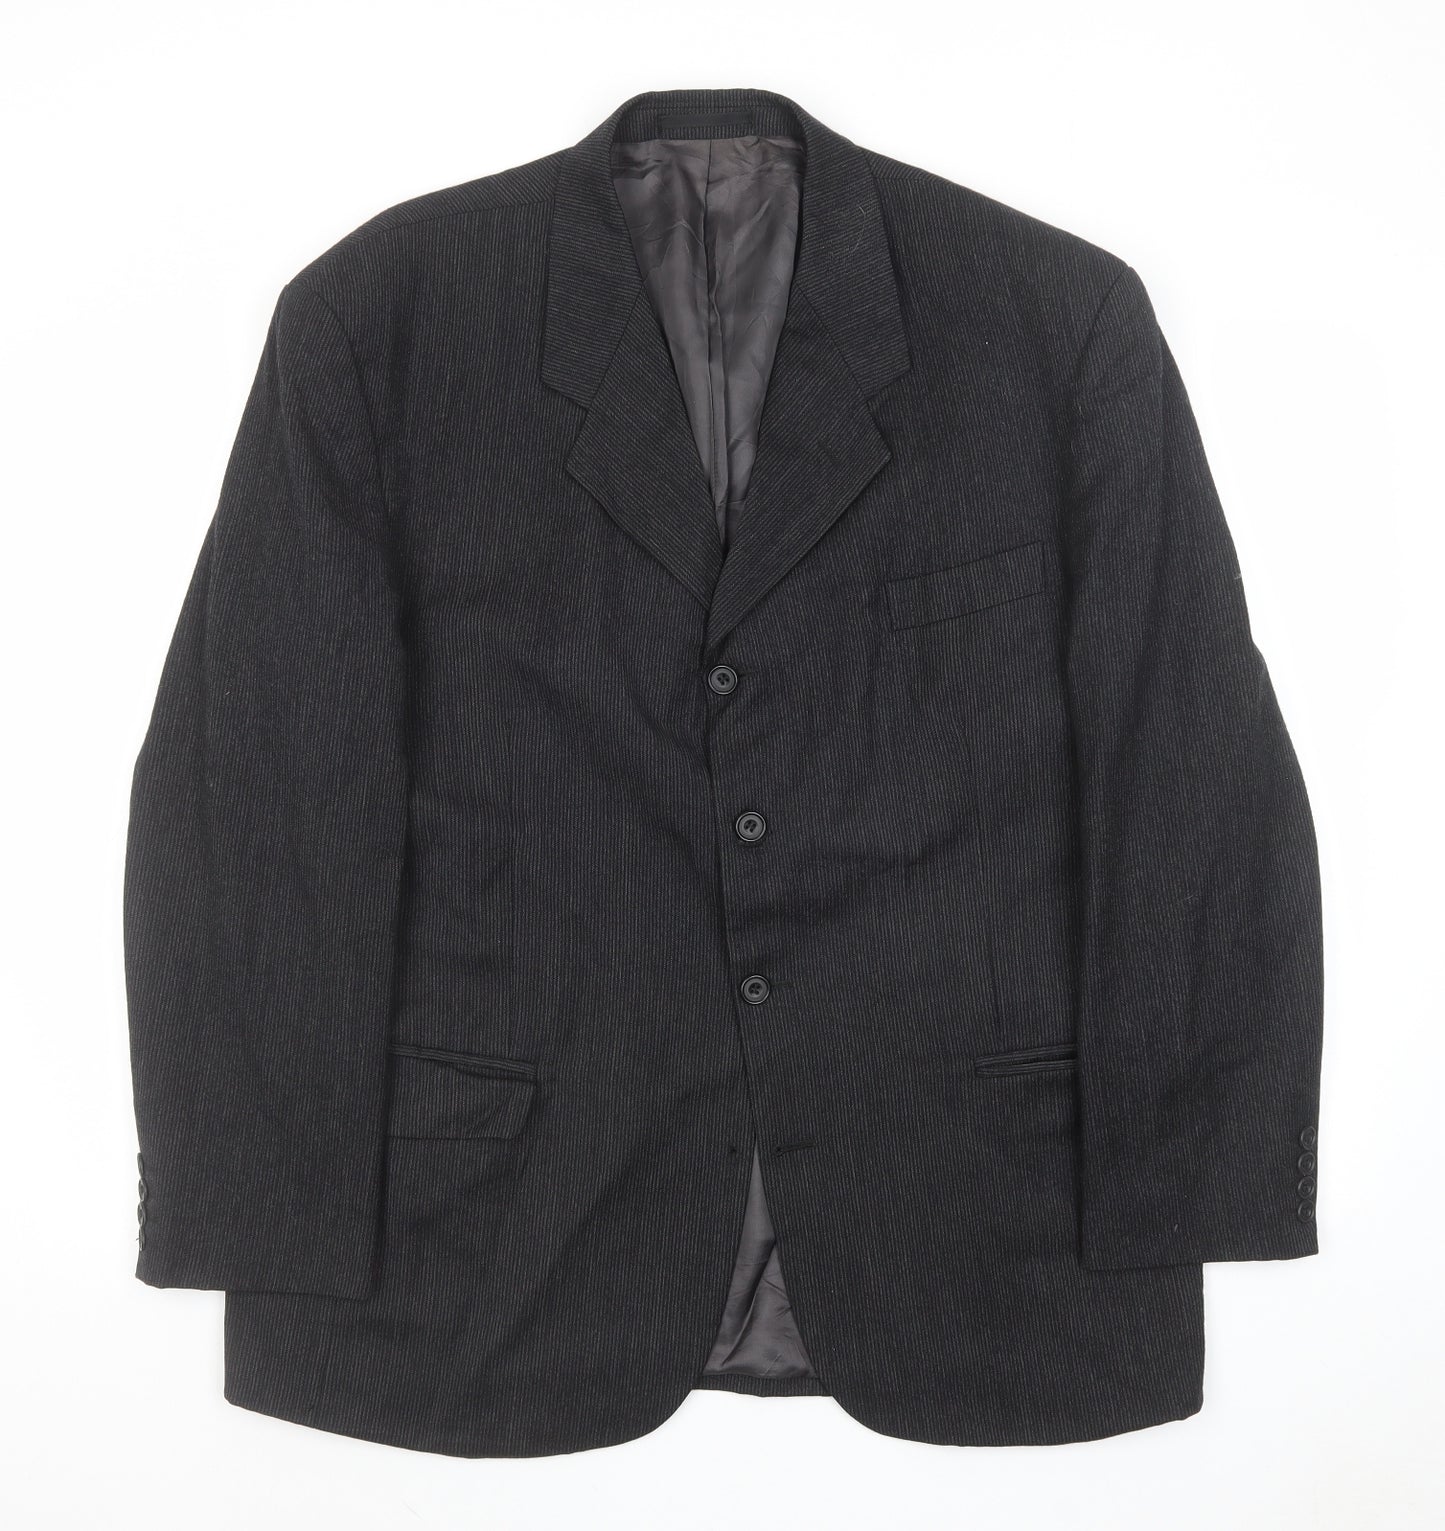 Candidate Mens Grey Striped Wool Jacket Suit Jacket Size 42 Regular